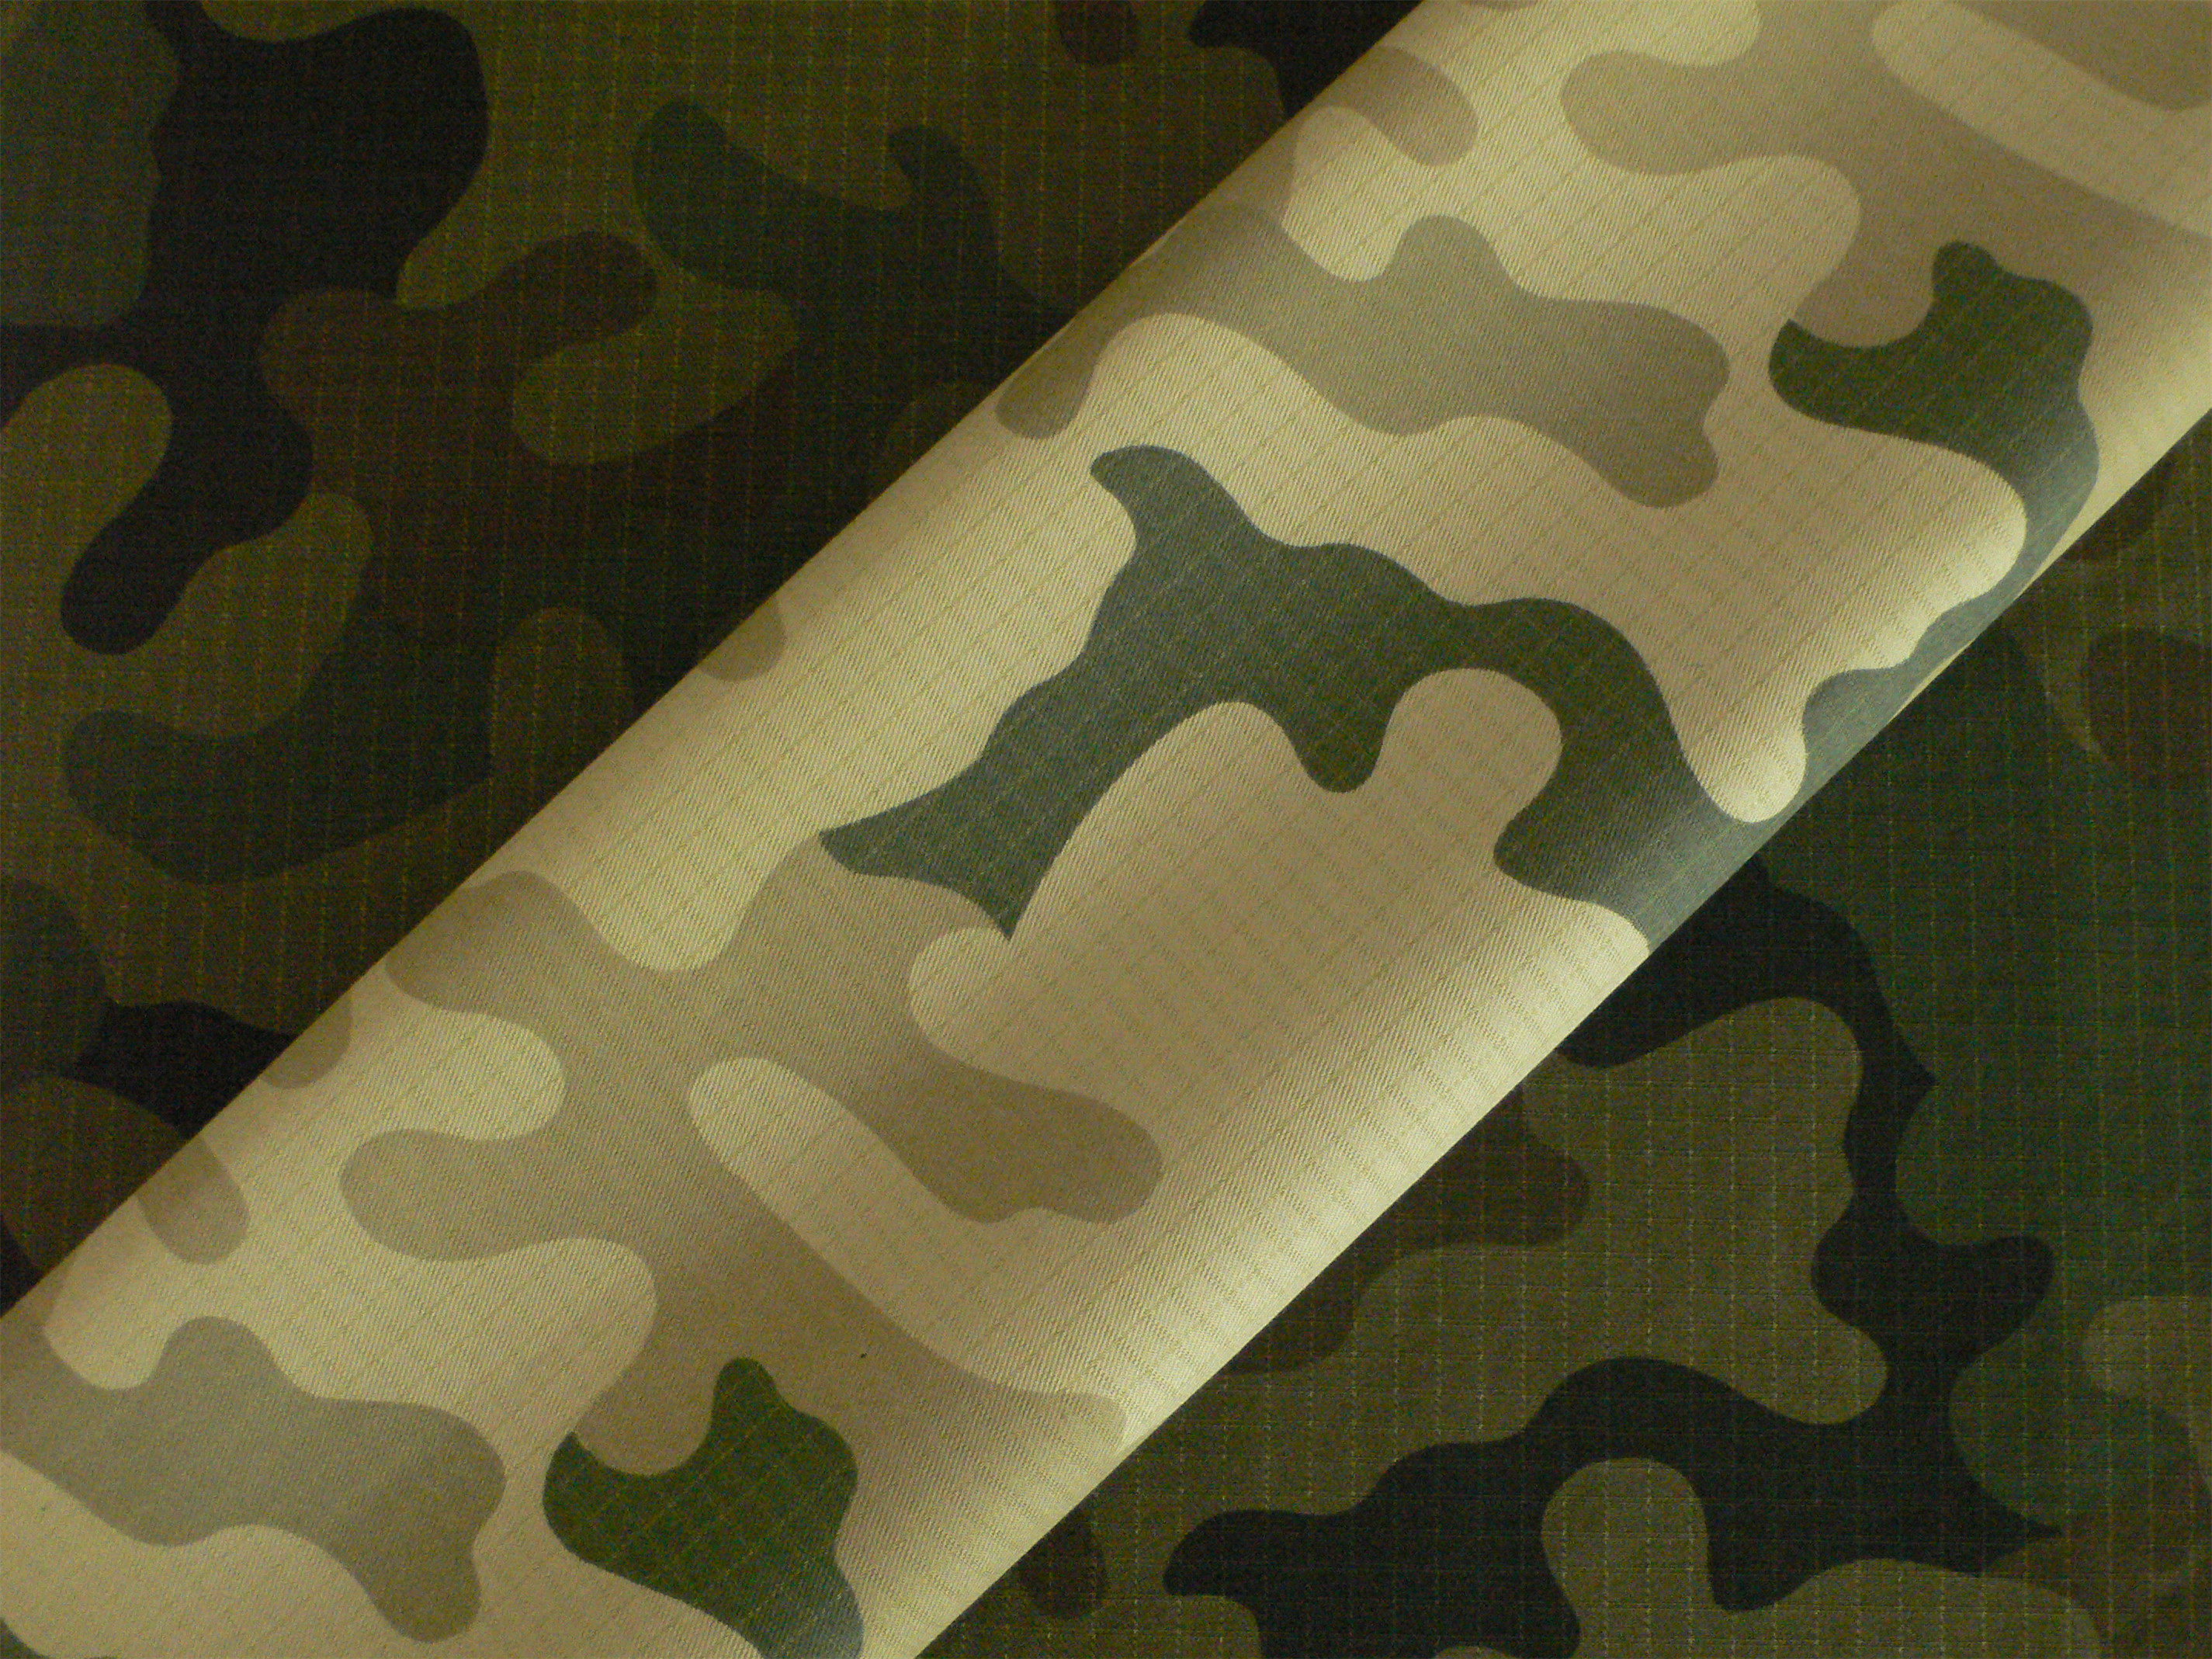 Polish Anti-infrared Military Camouflage Uniform Fabric 